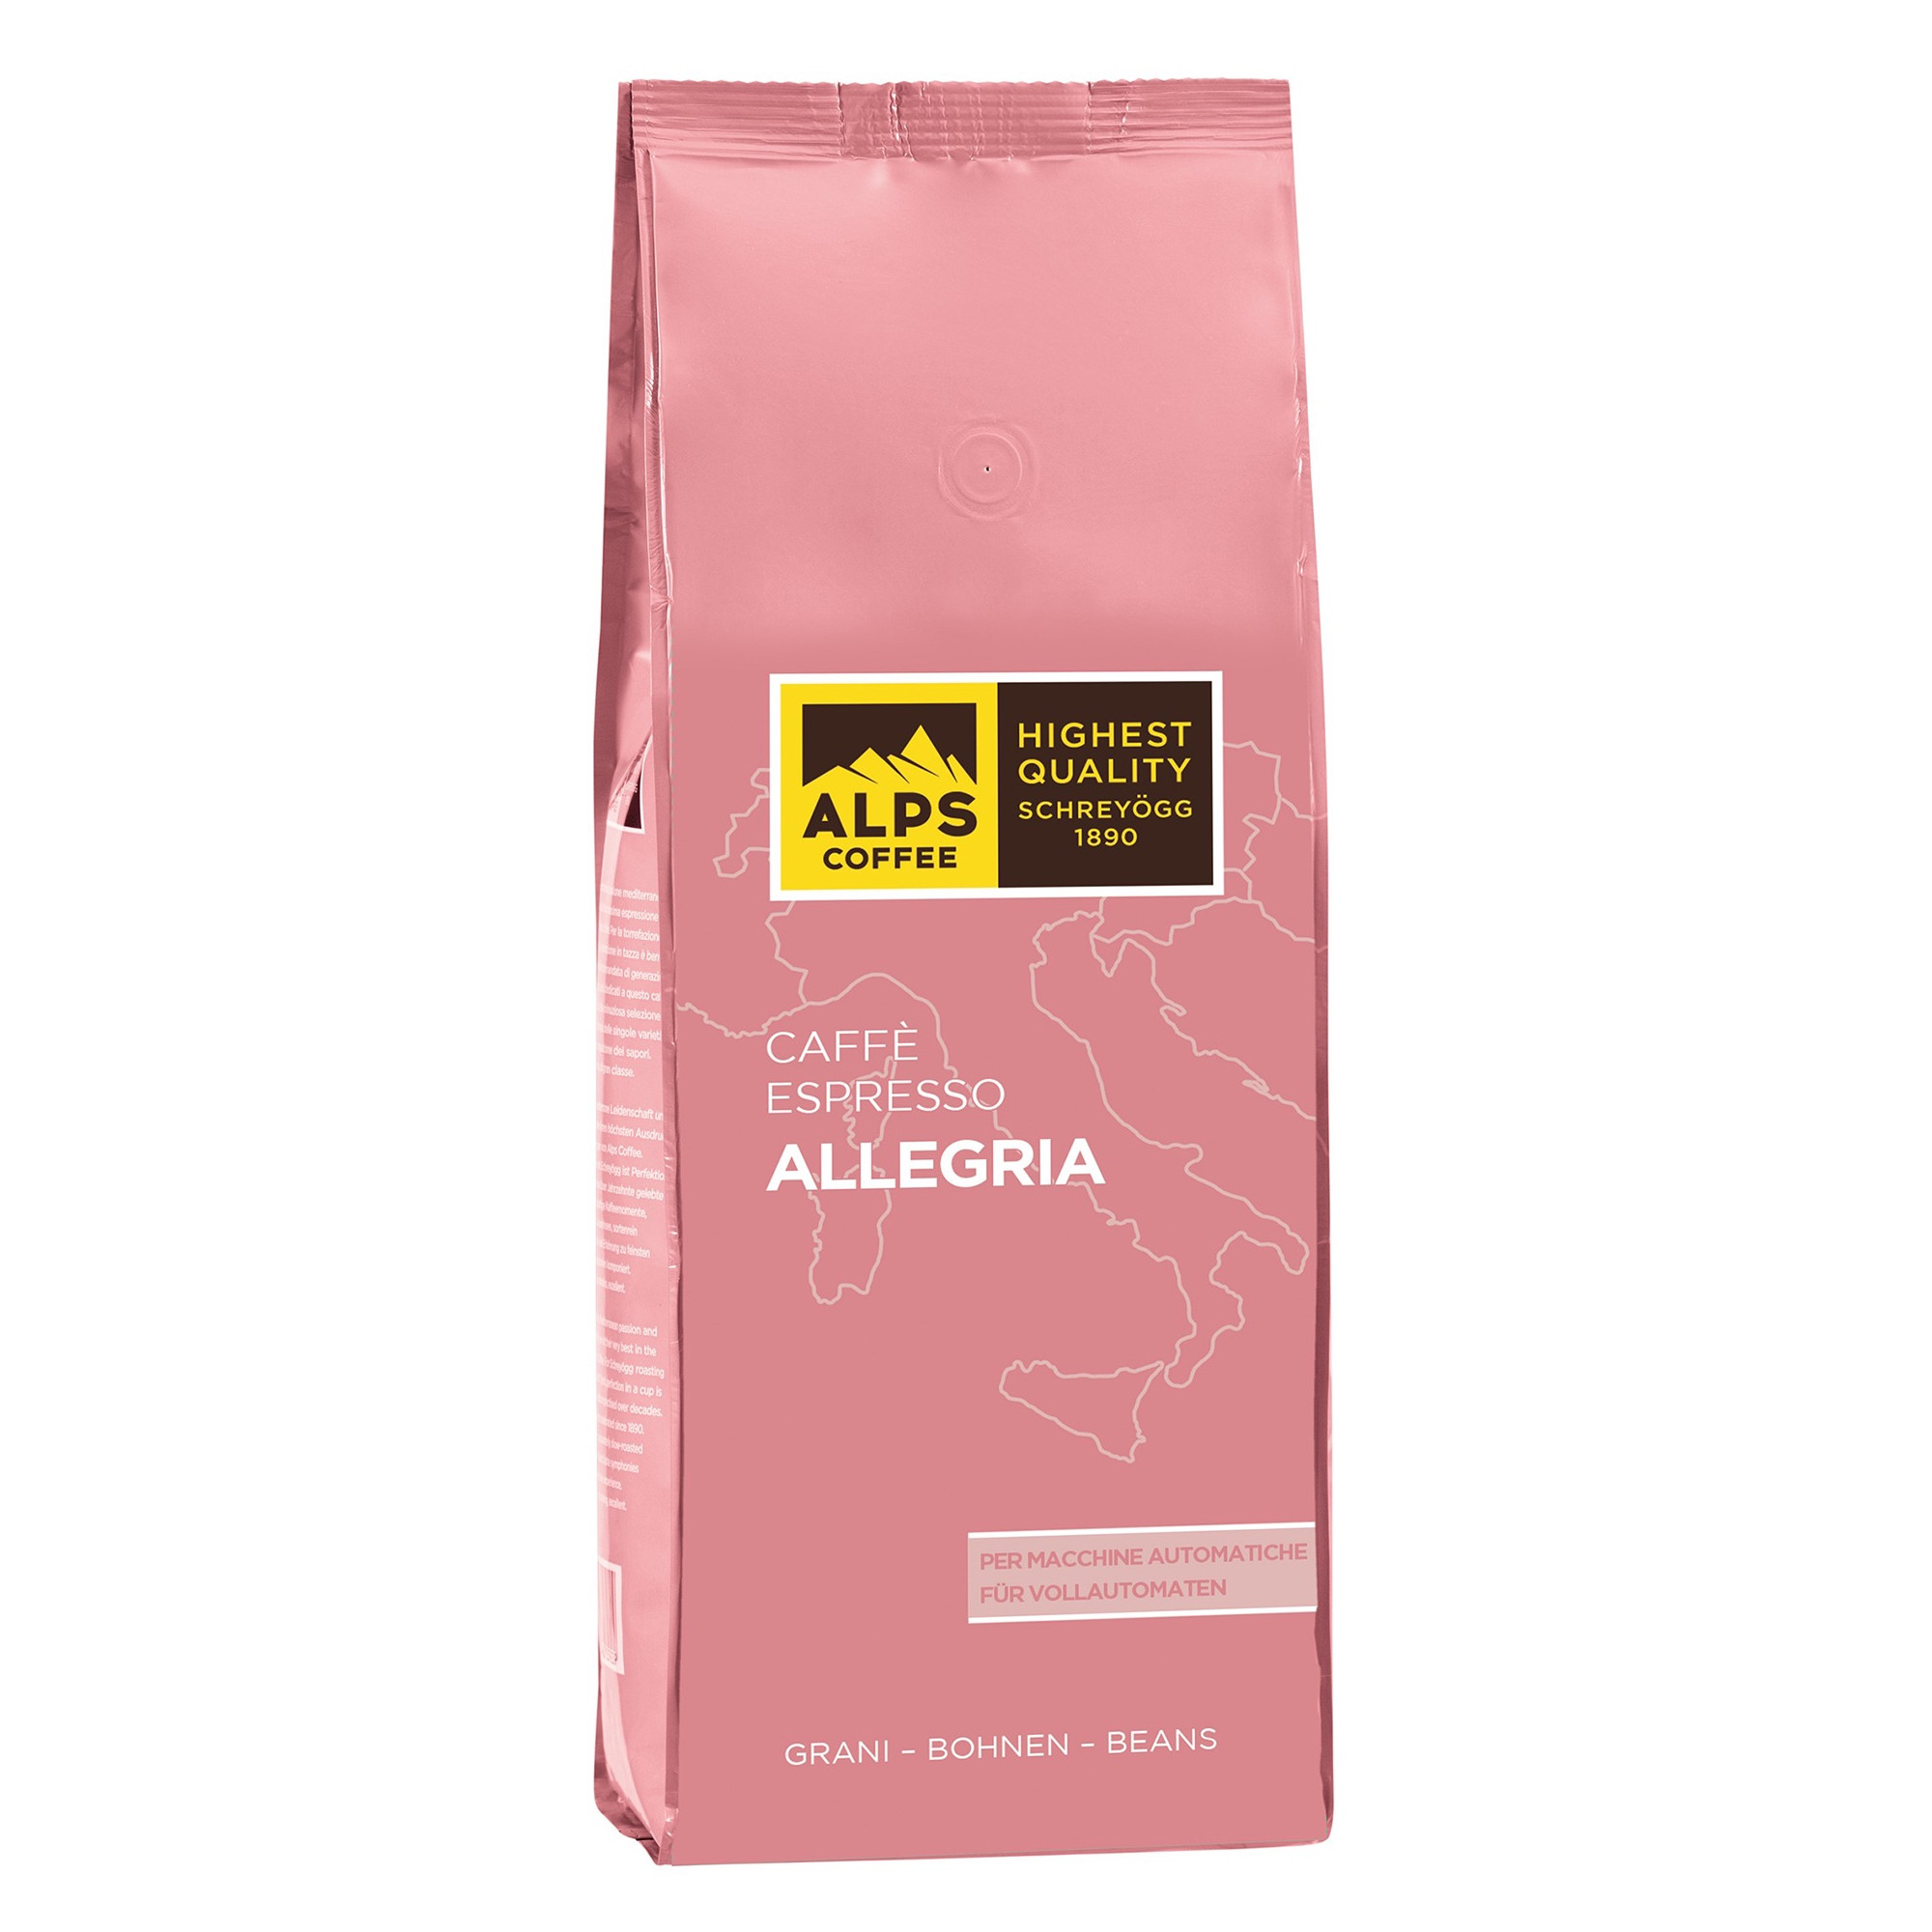 Alps Coffee Allegria Caffè Espresso 500g Bohnen